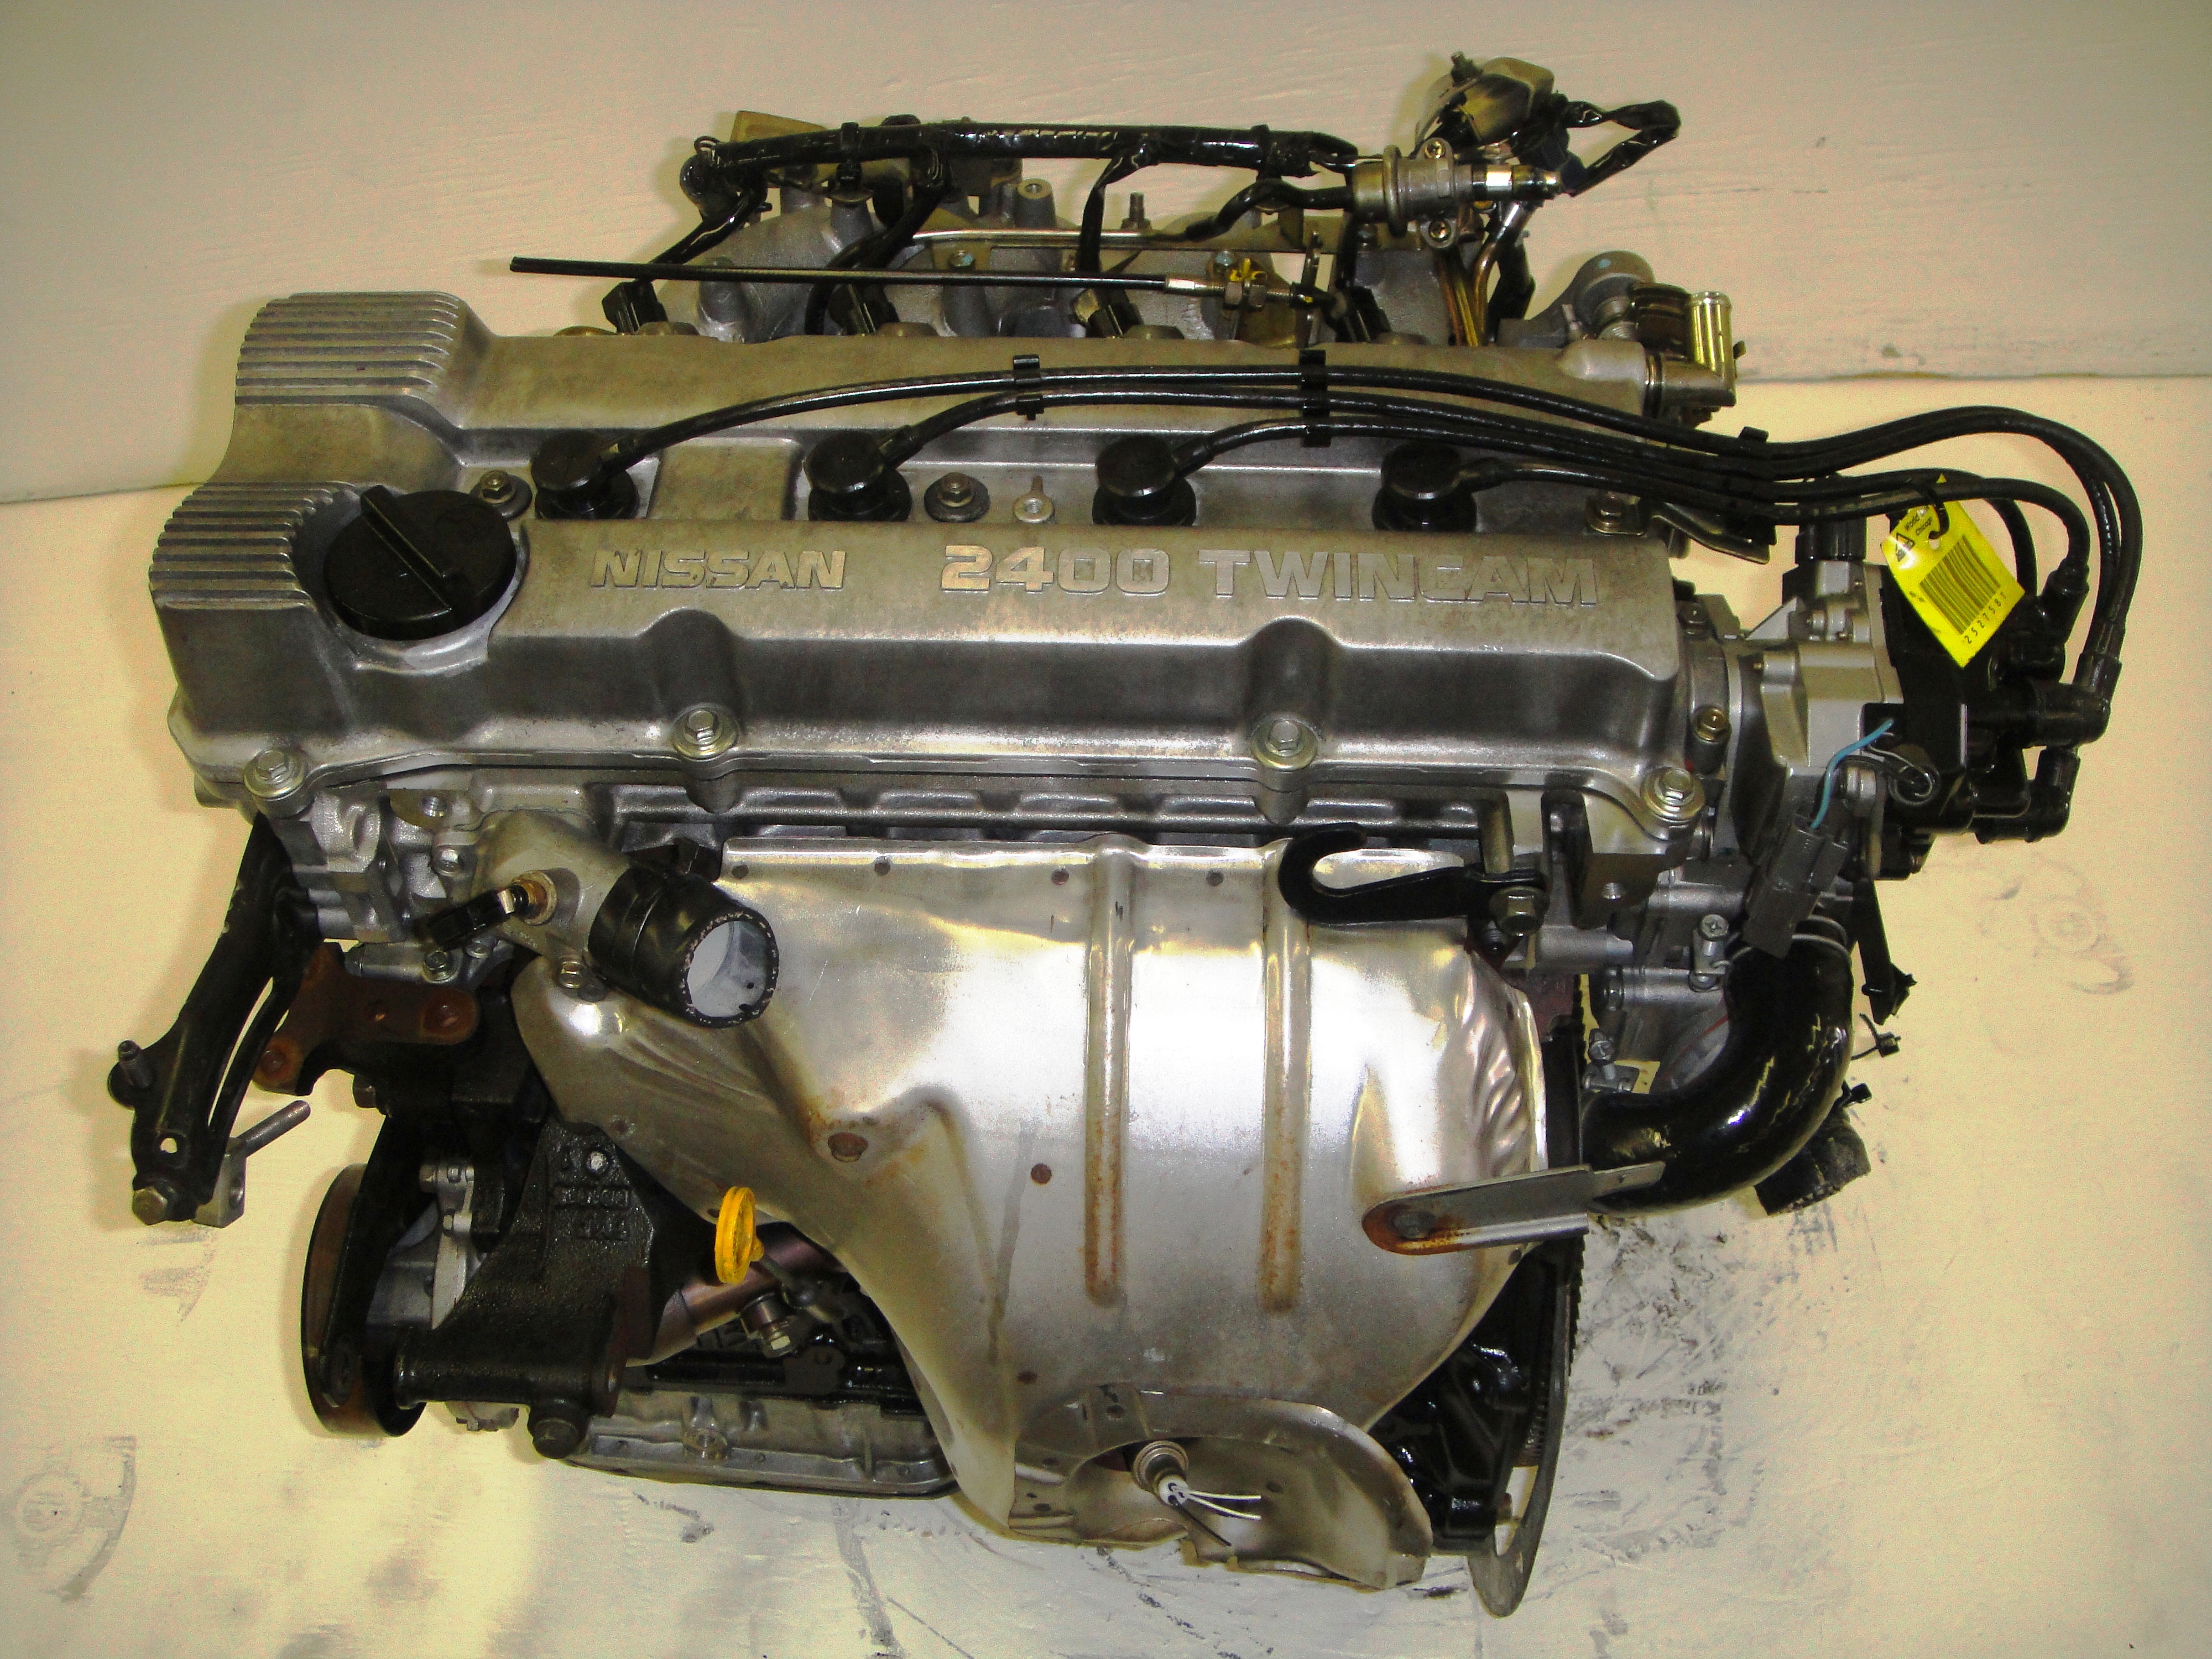 1993 Nissan altima rebuilt engine #8